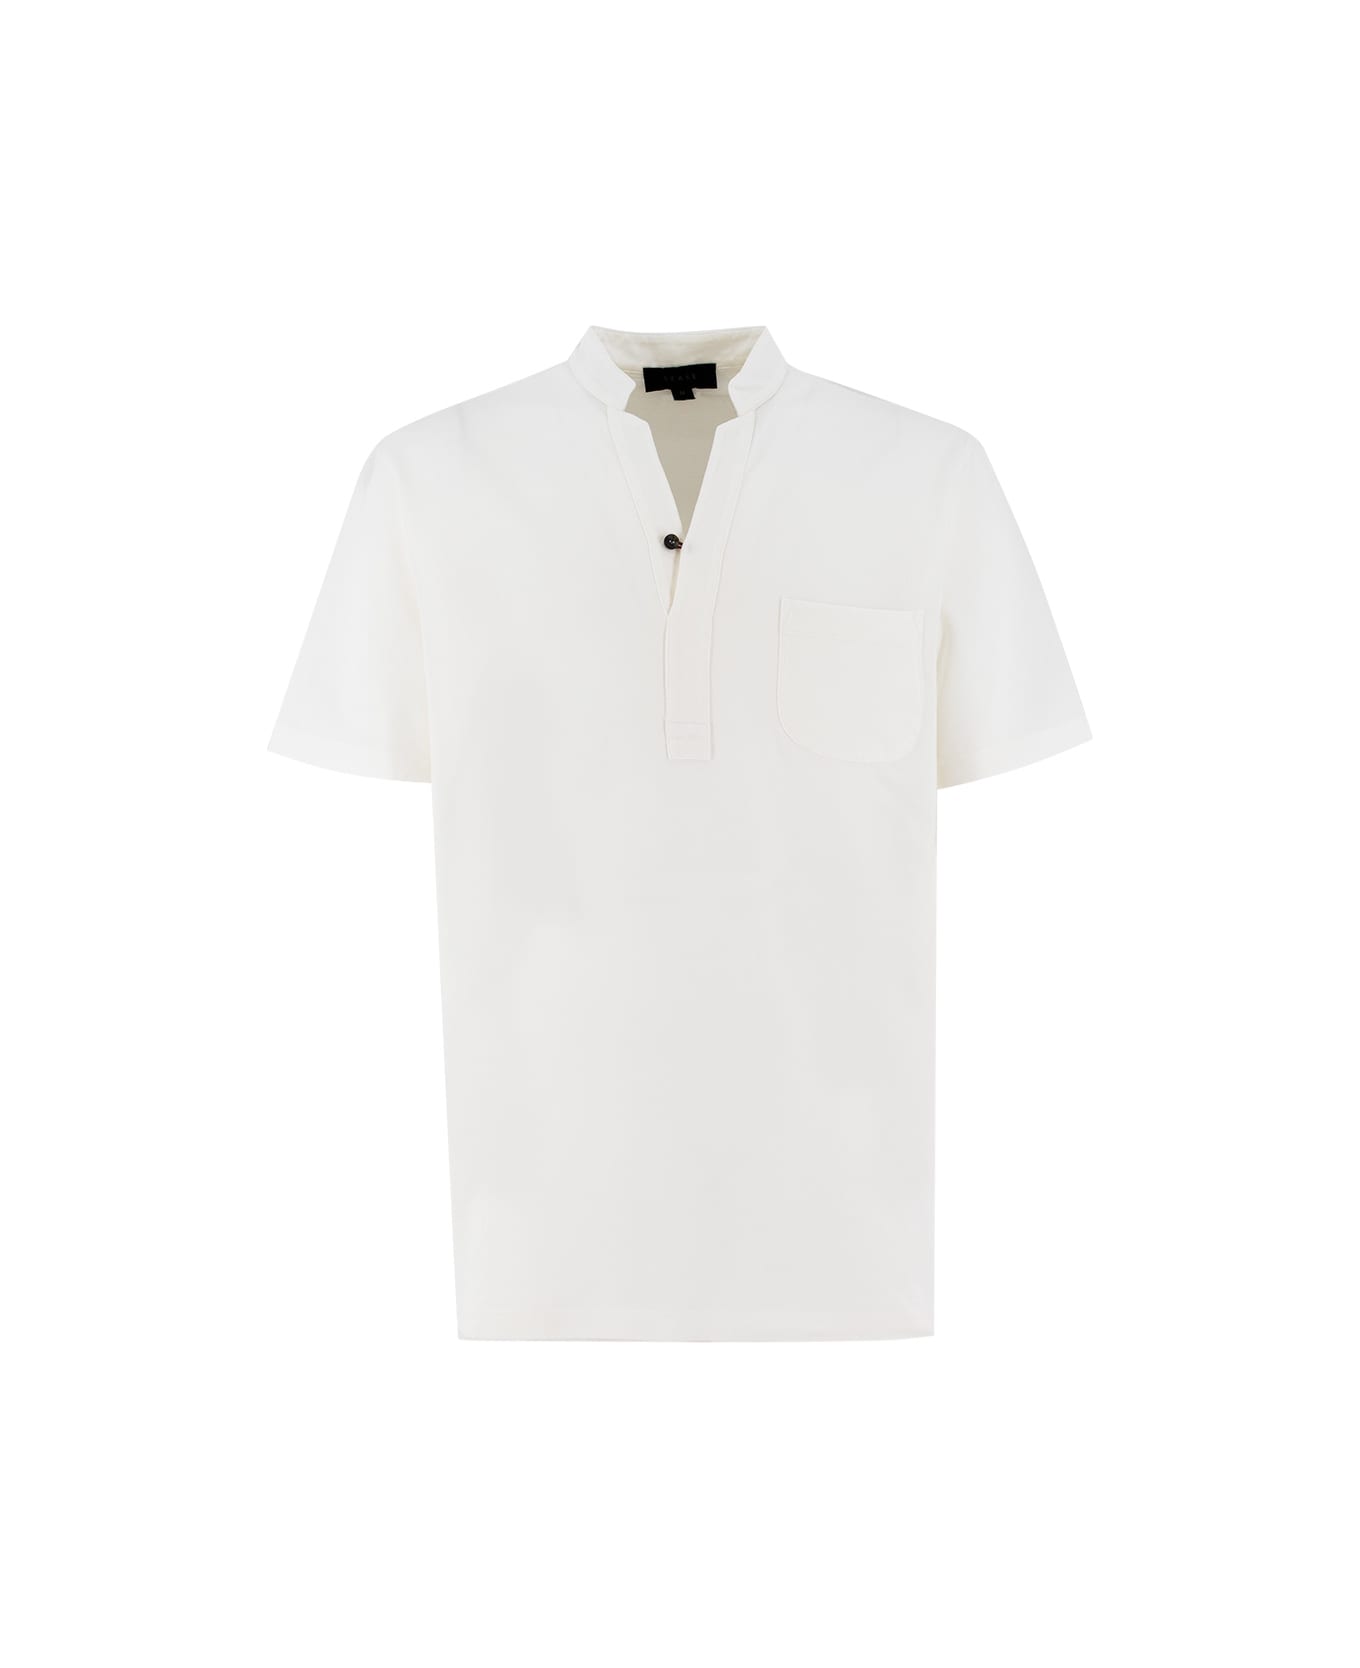 Sease Polo - WHITE ポロシャツ